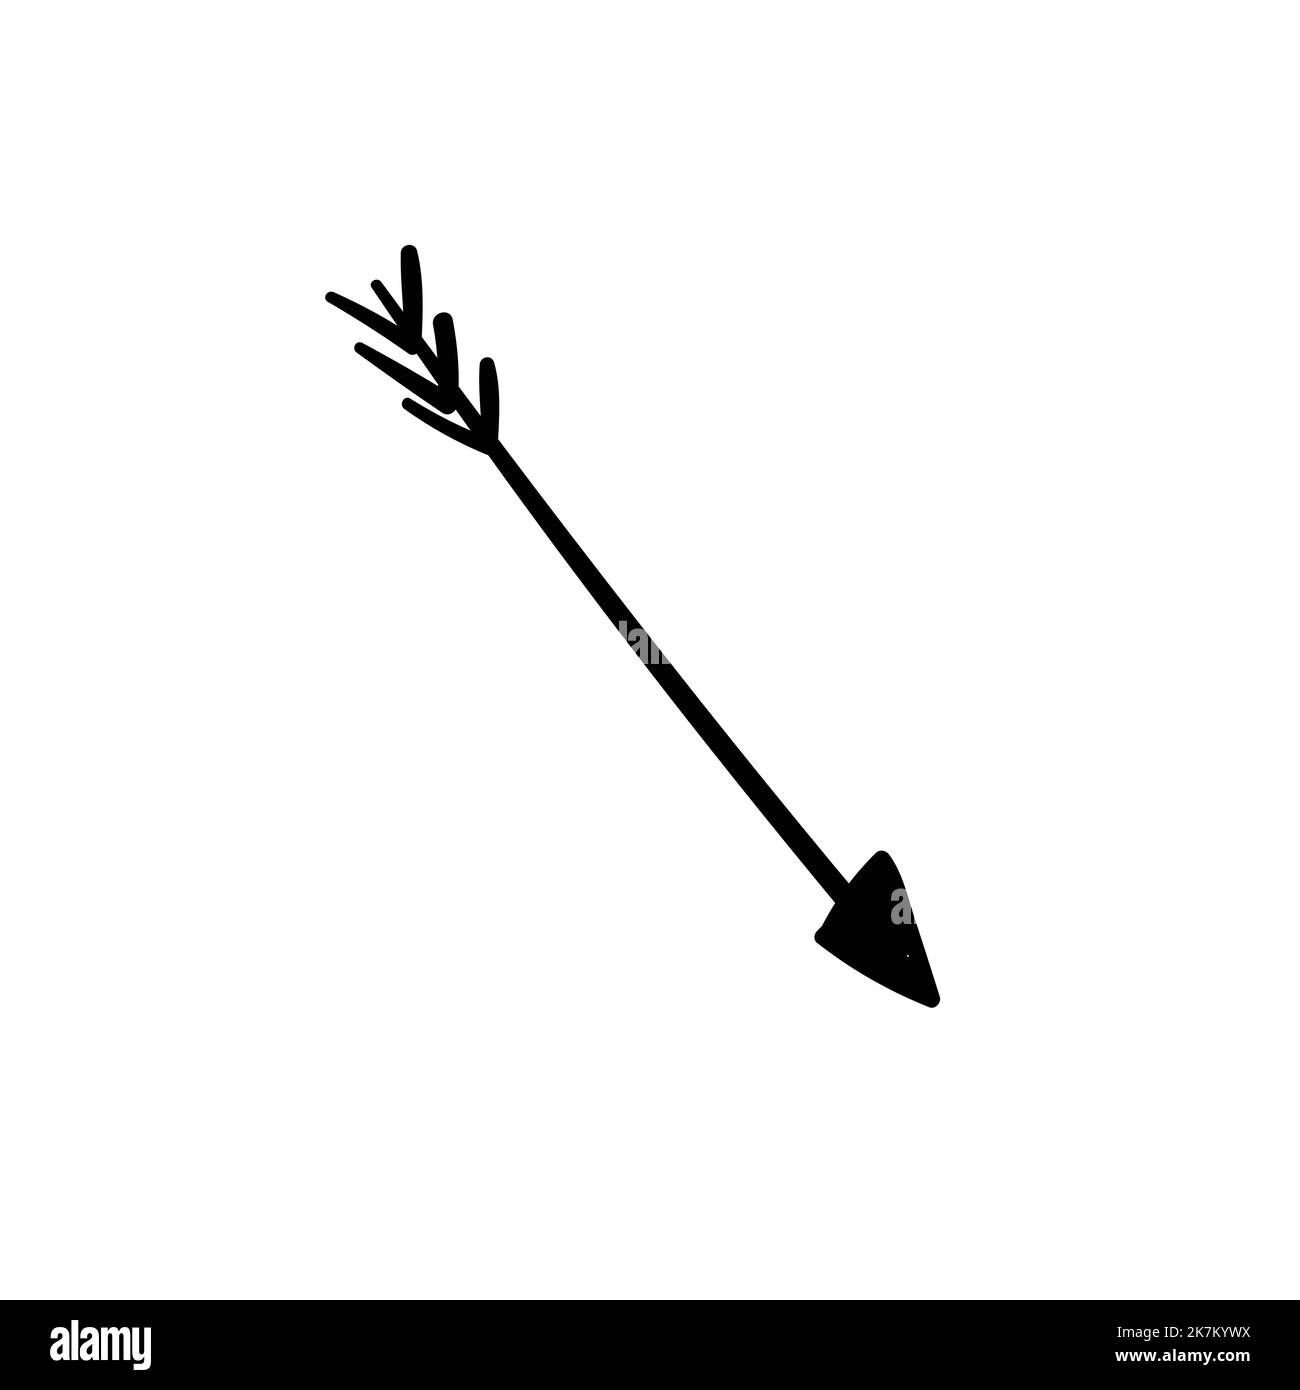 Contador manual de flechas – Sagitaria